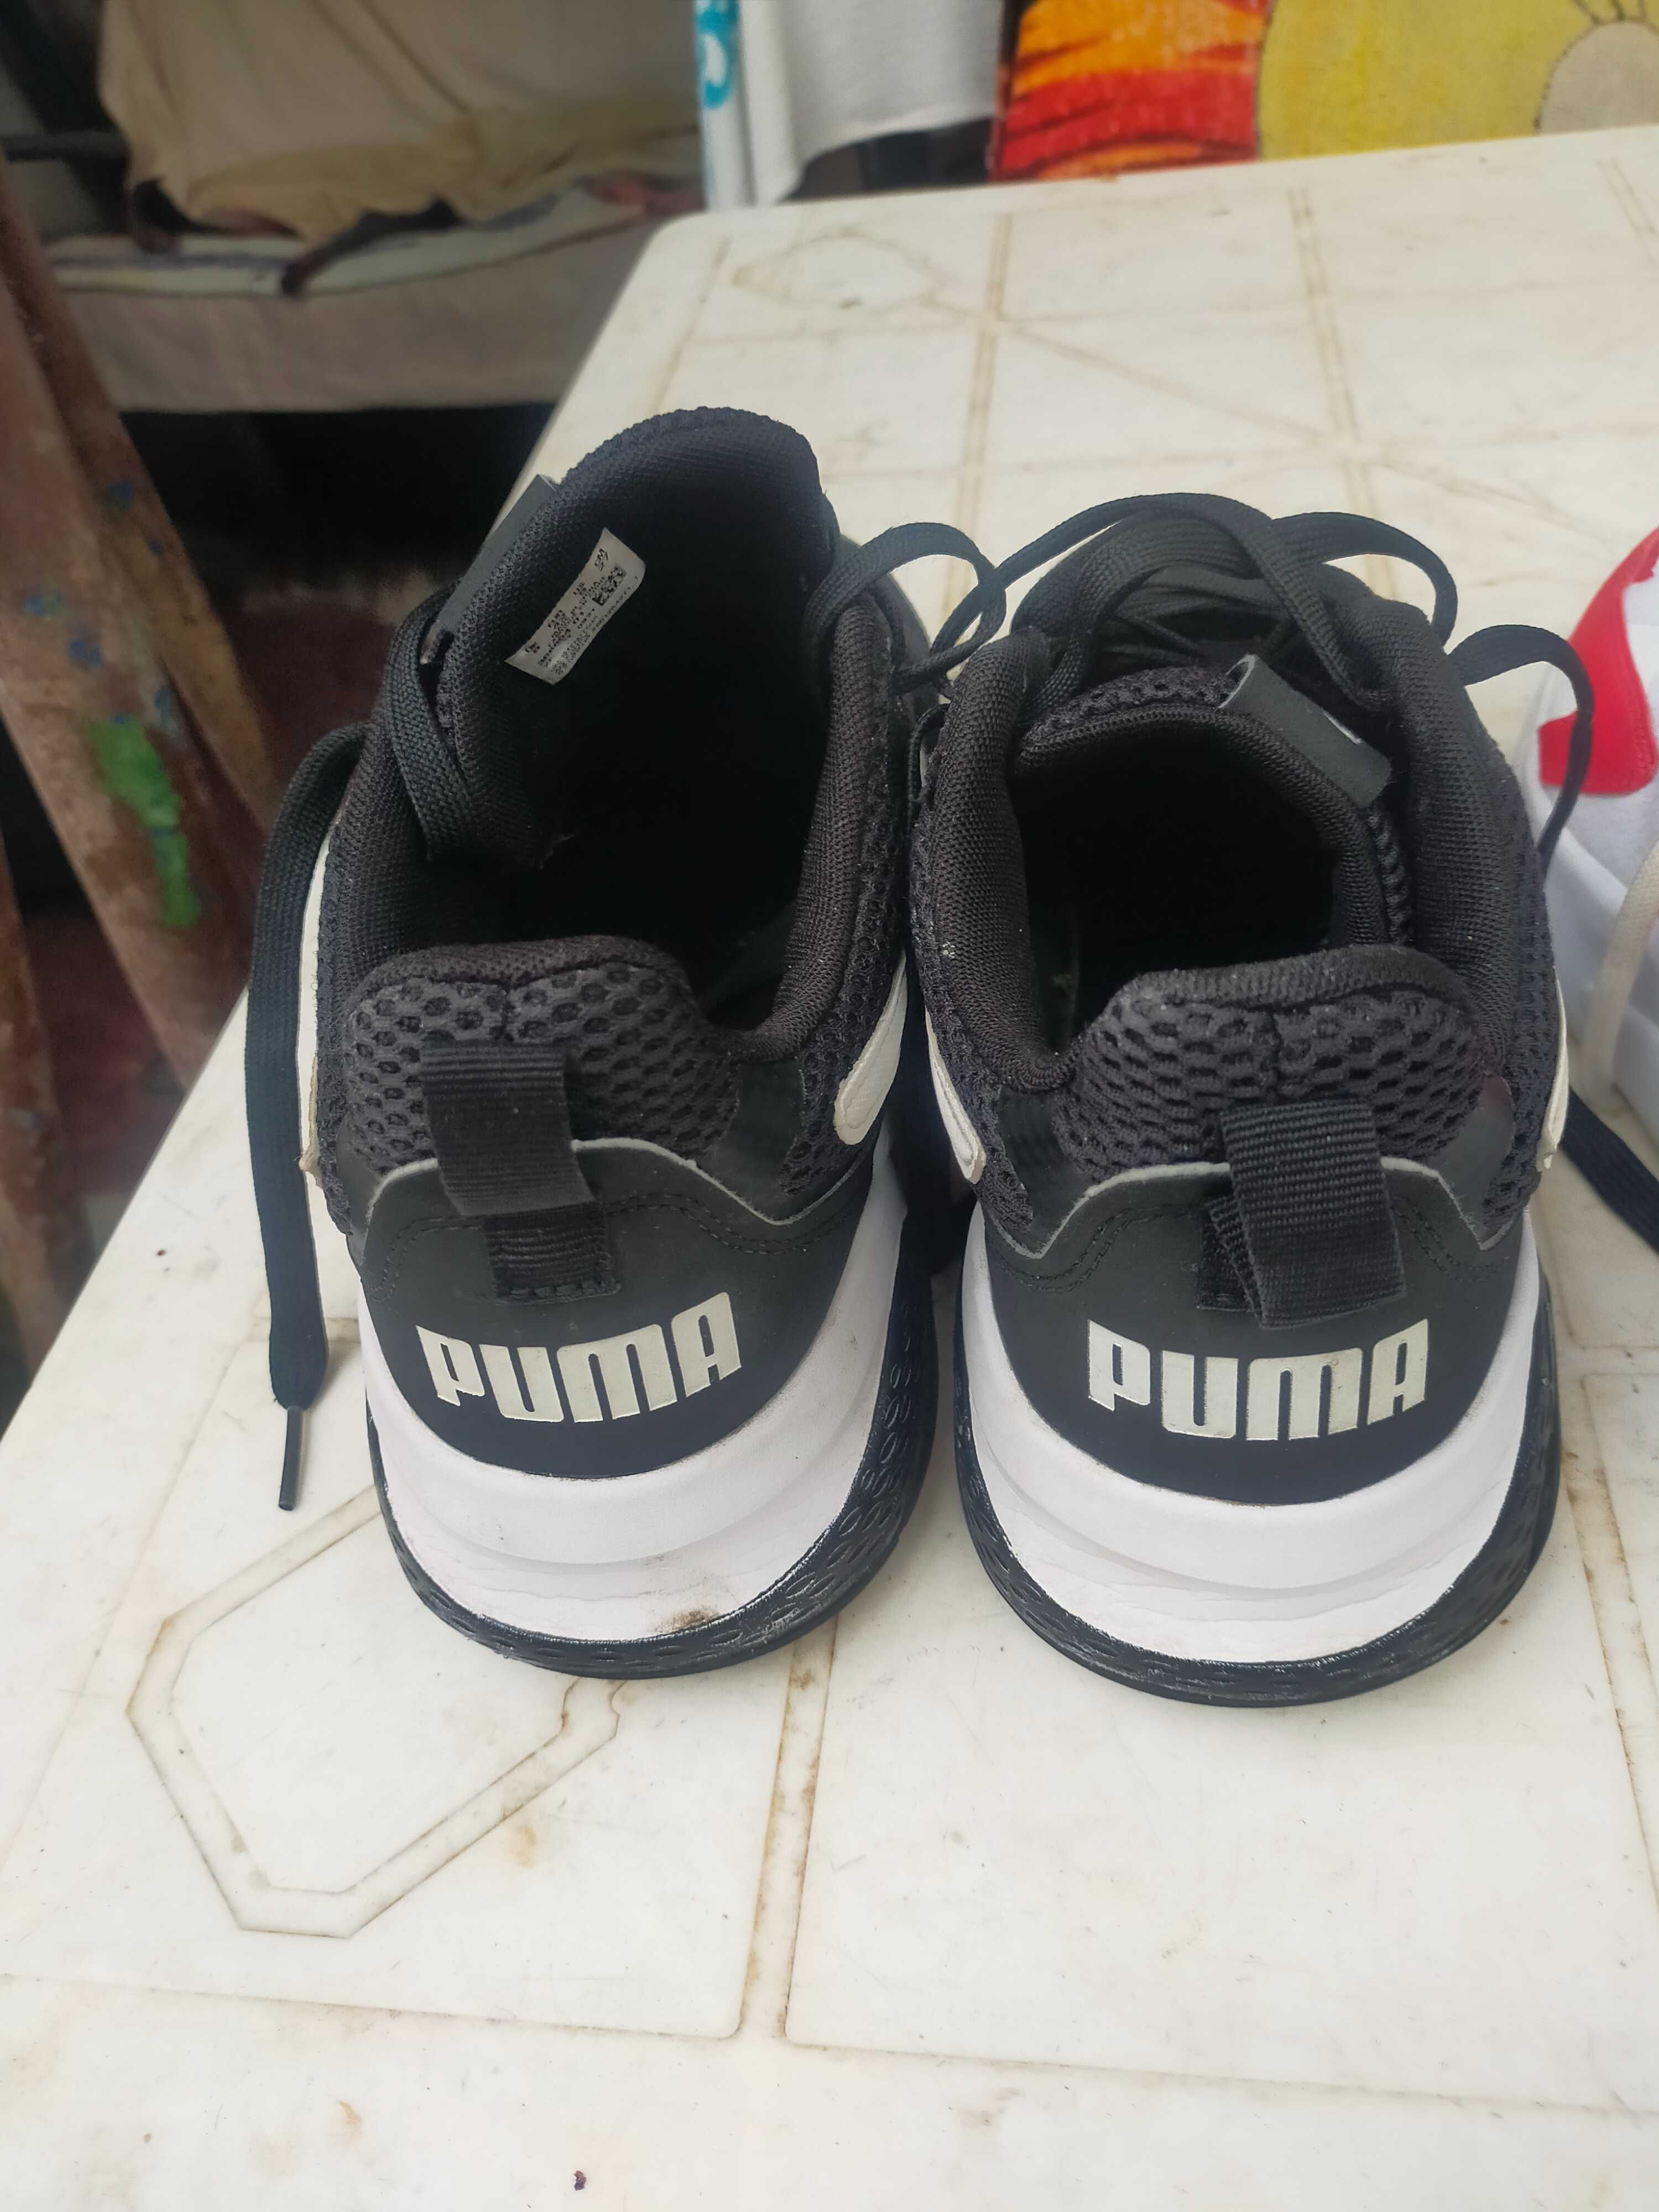 Adidasi originali import second nr. 42 Puma / Lotto / Nike airmax